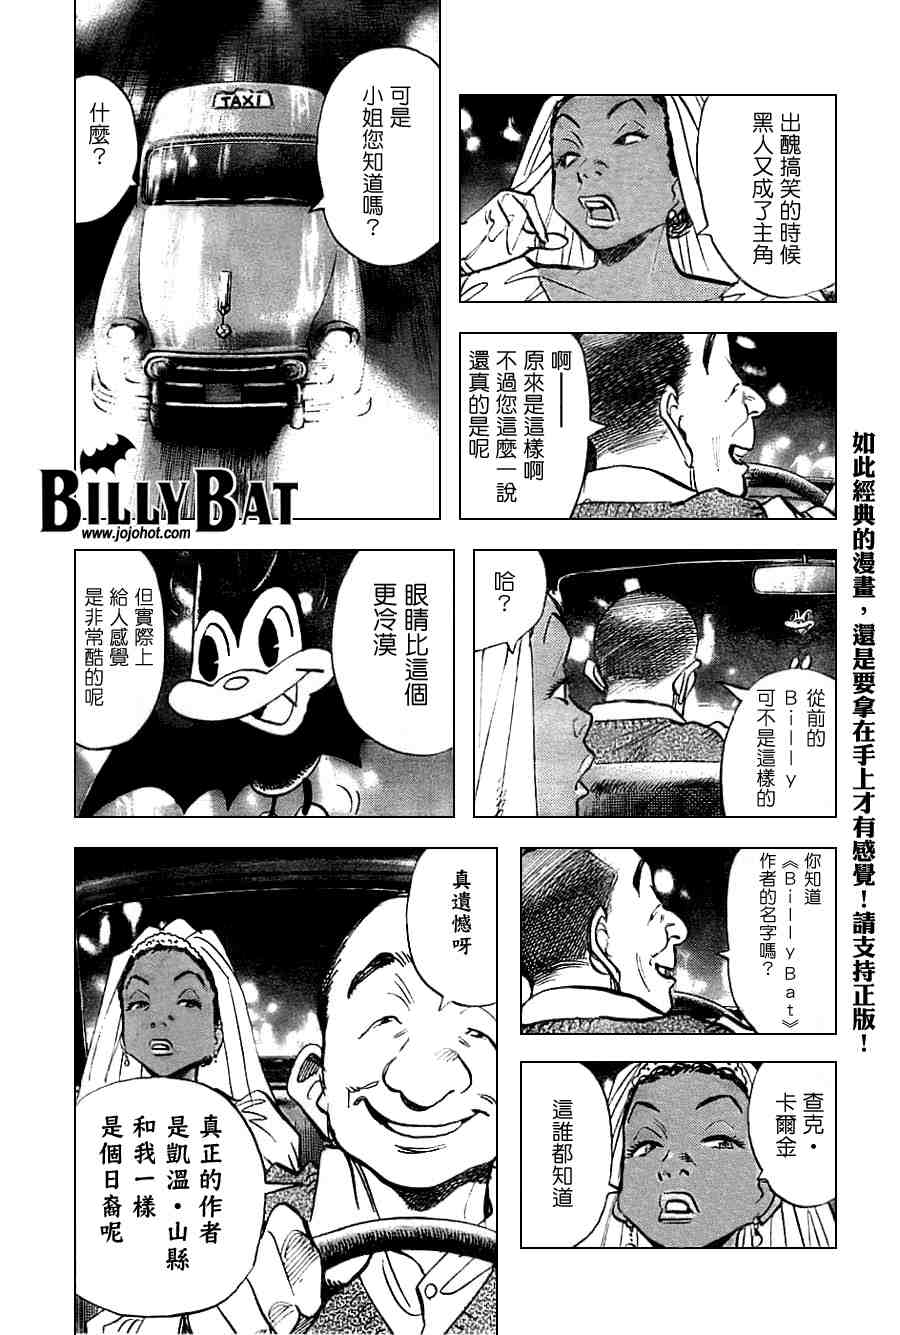 Billy_Bat - 第2卷(3/5) - 4